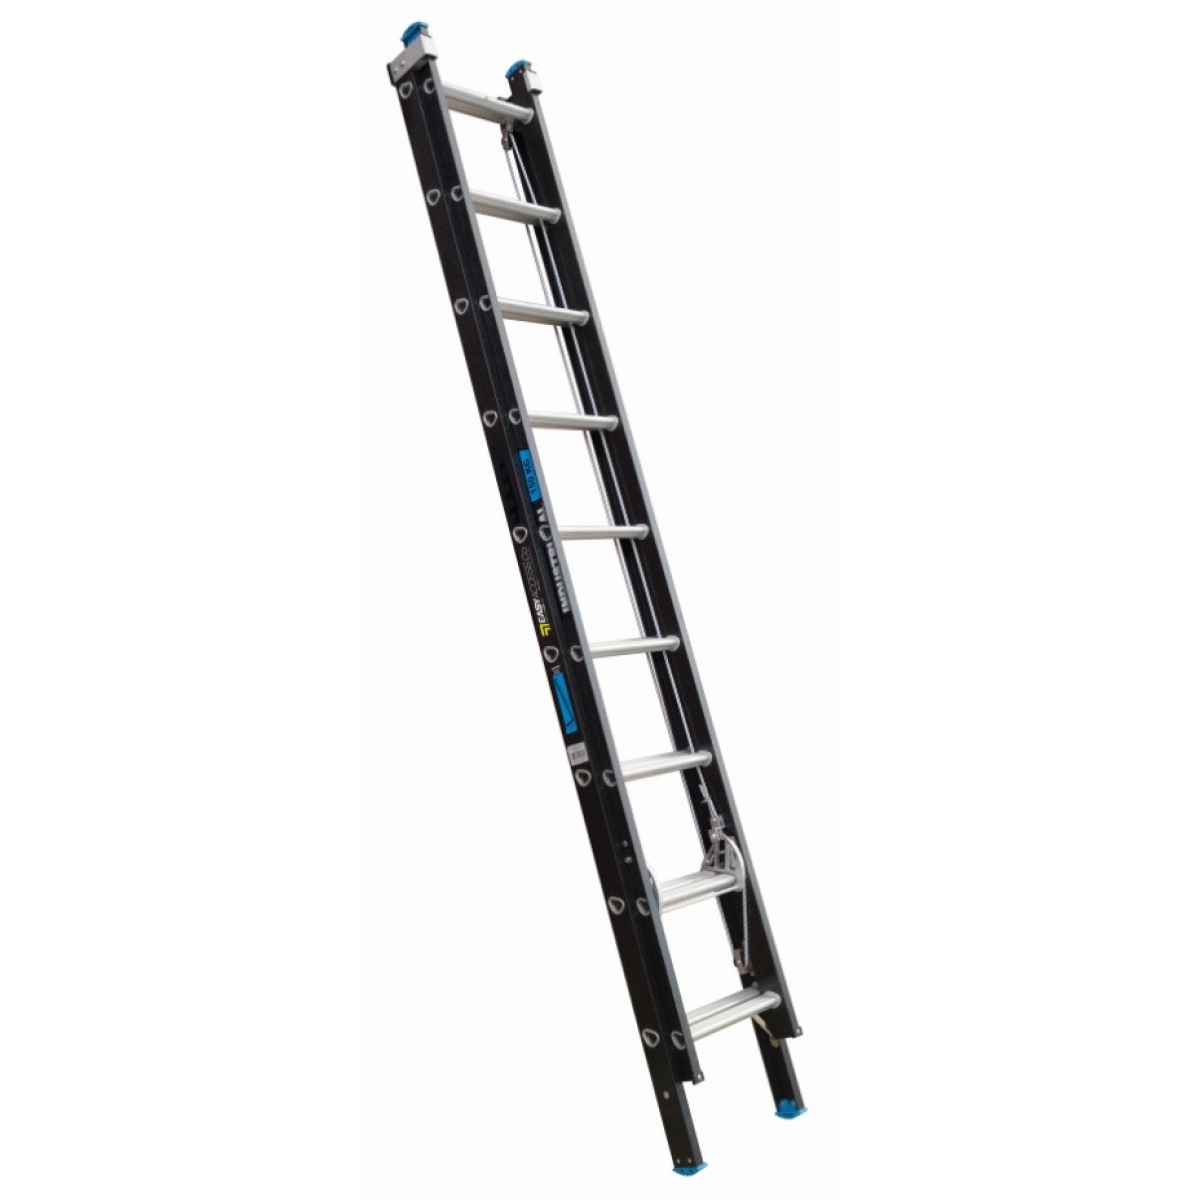 Easy Access Titan Tuff Fibreglass Extension Ladder